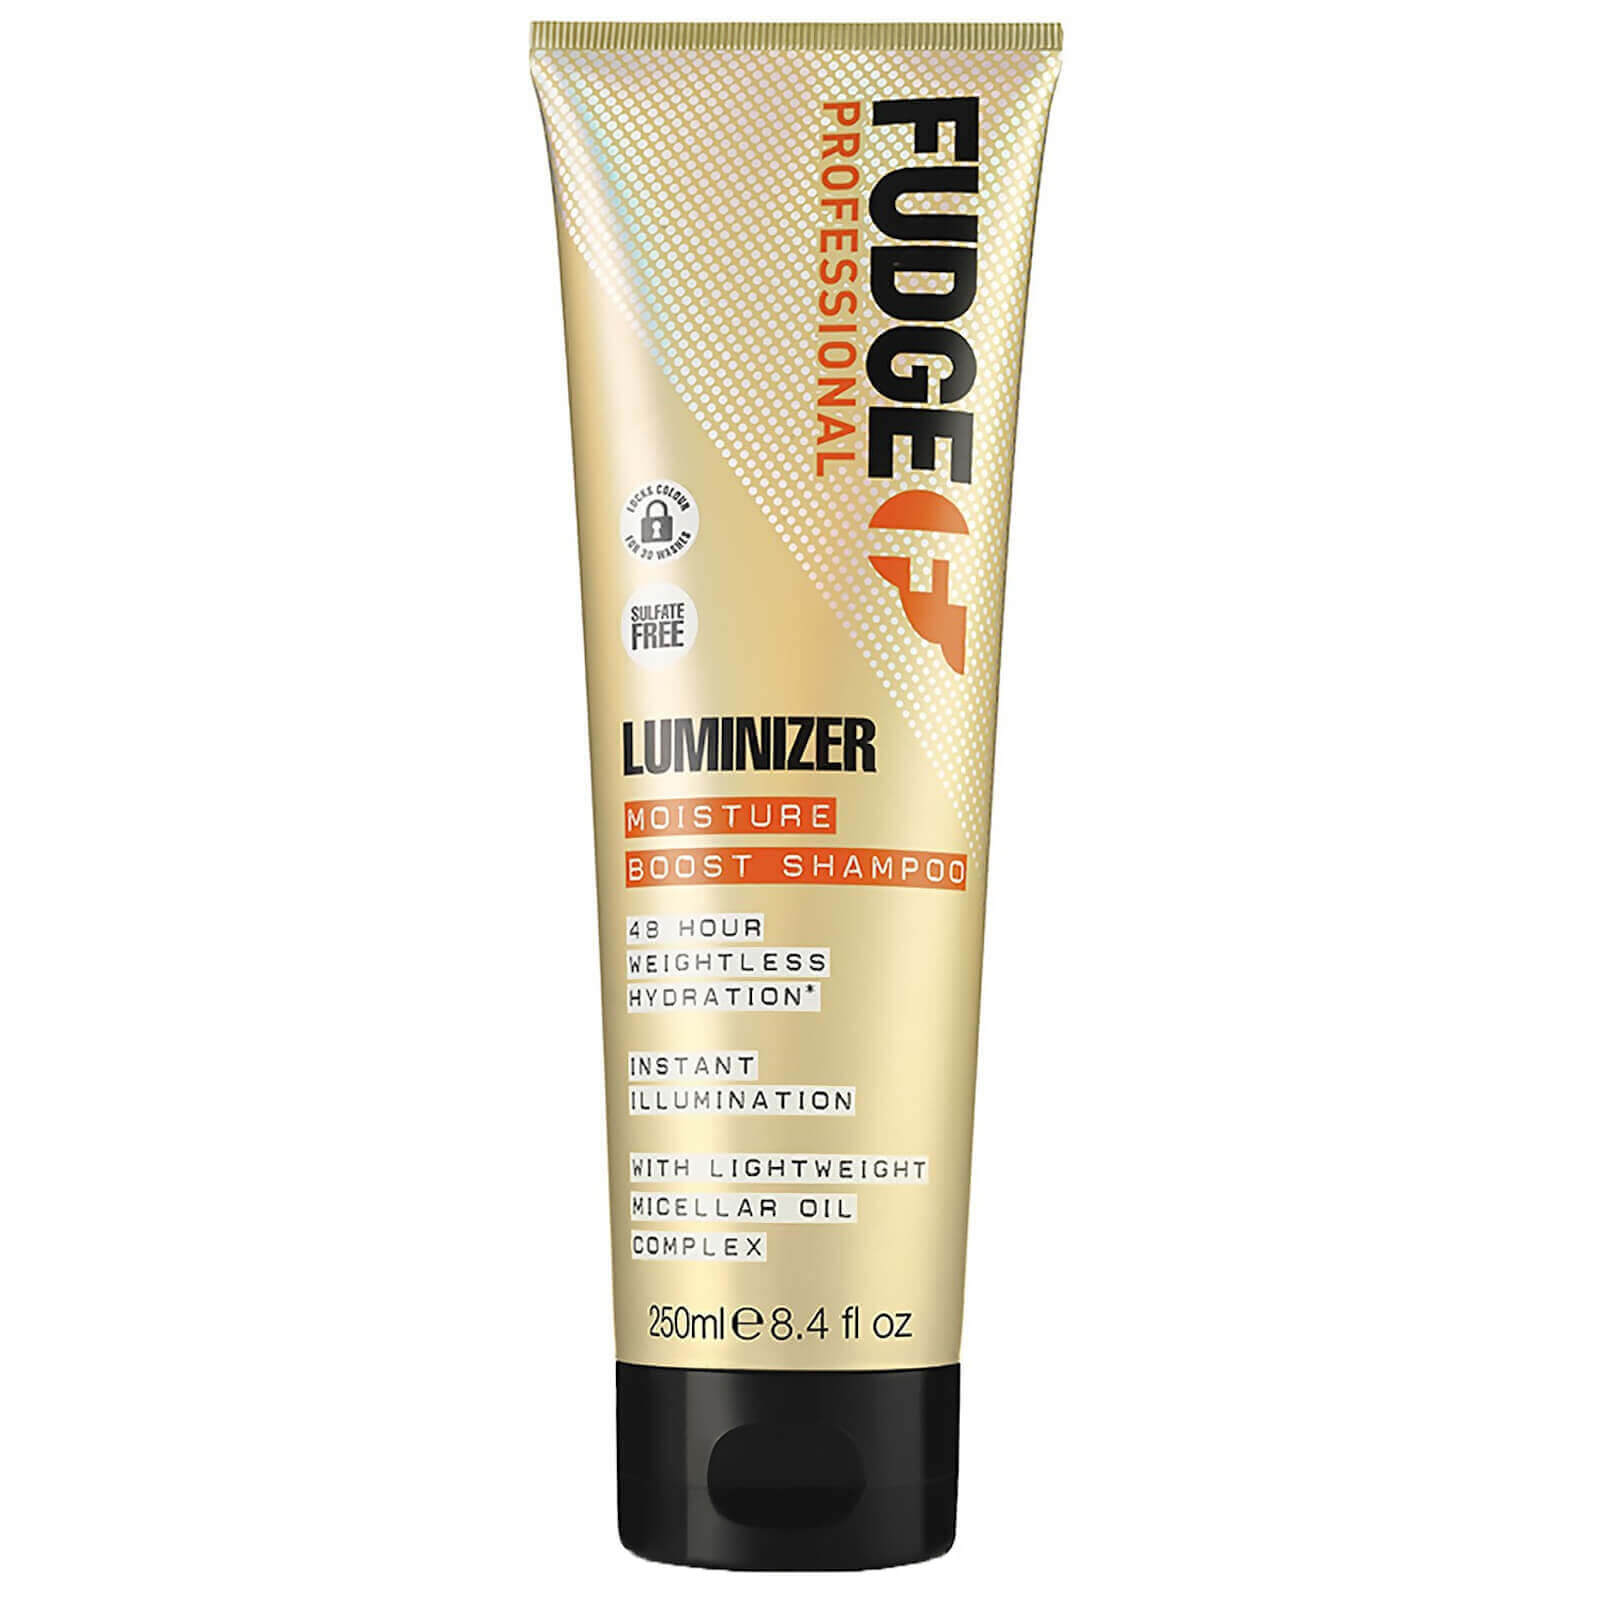 Luminizer Moisture Boost Shampoo 250ml